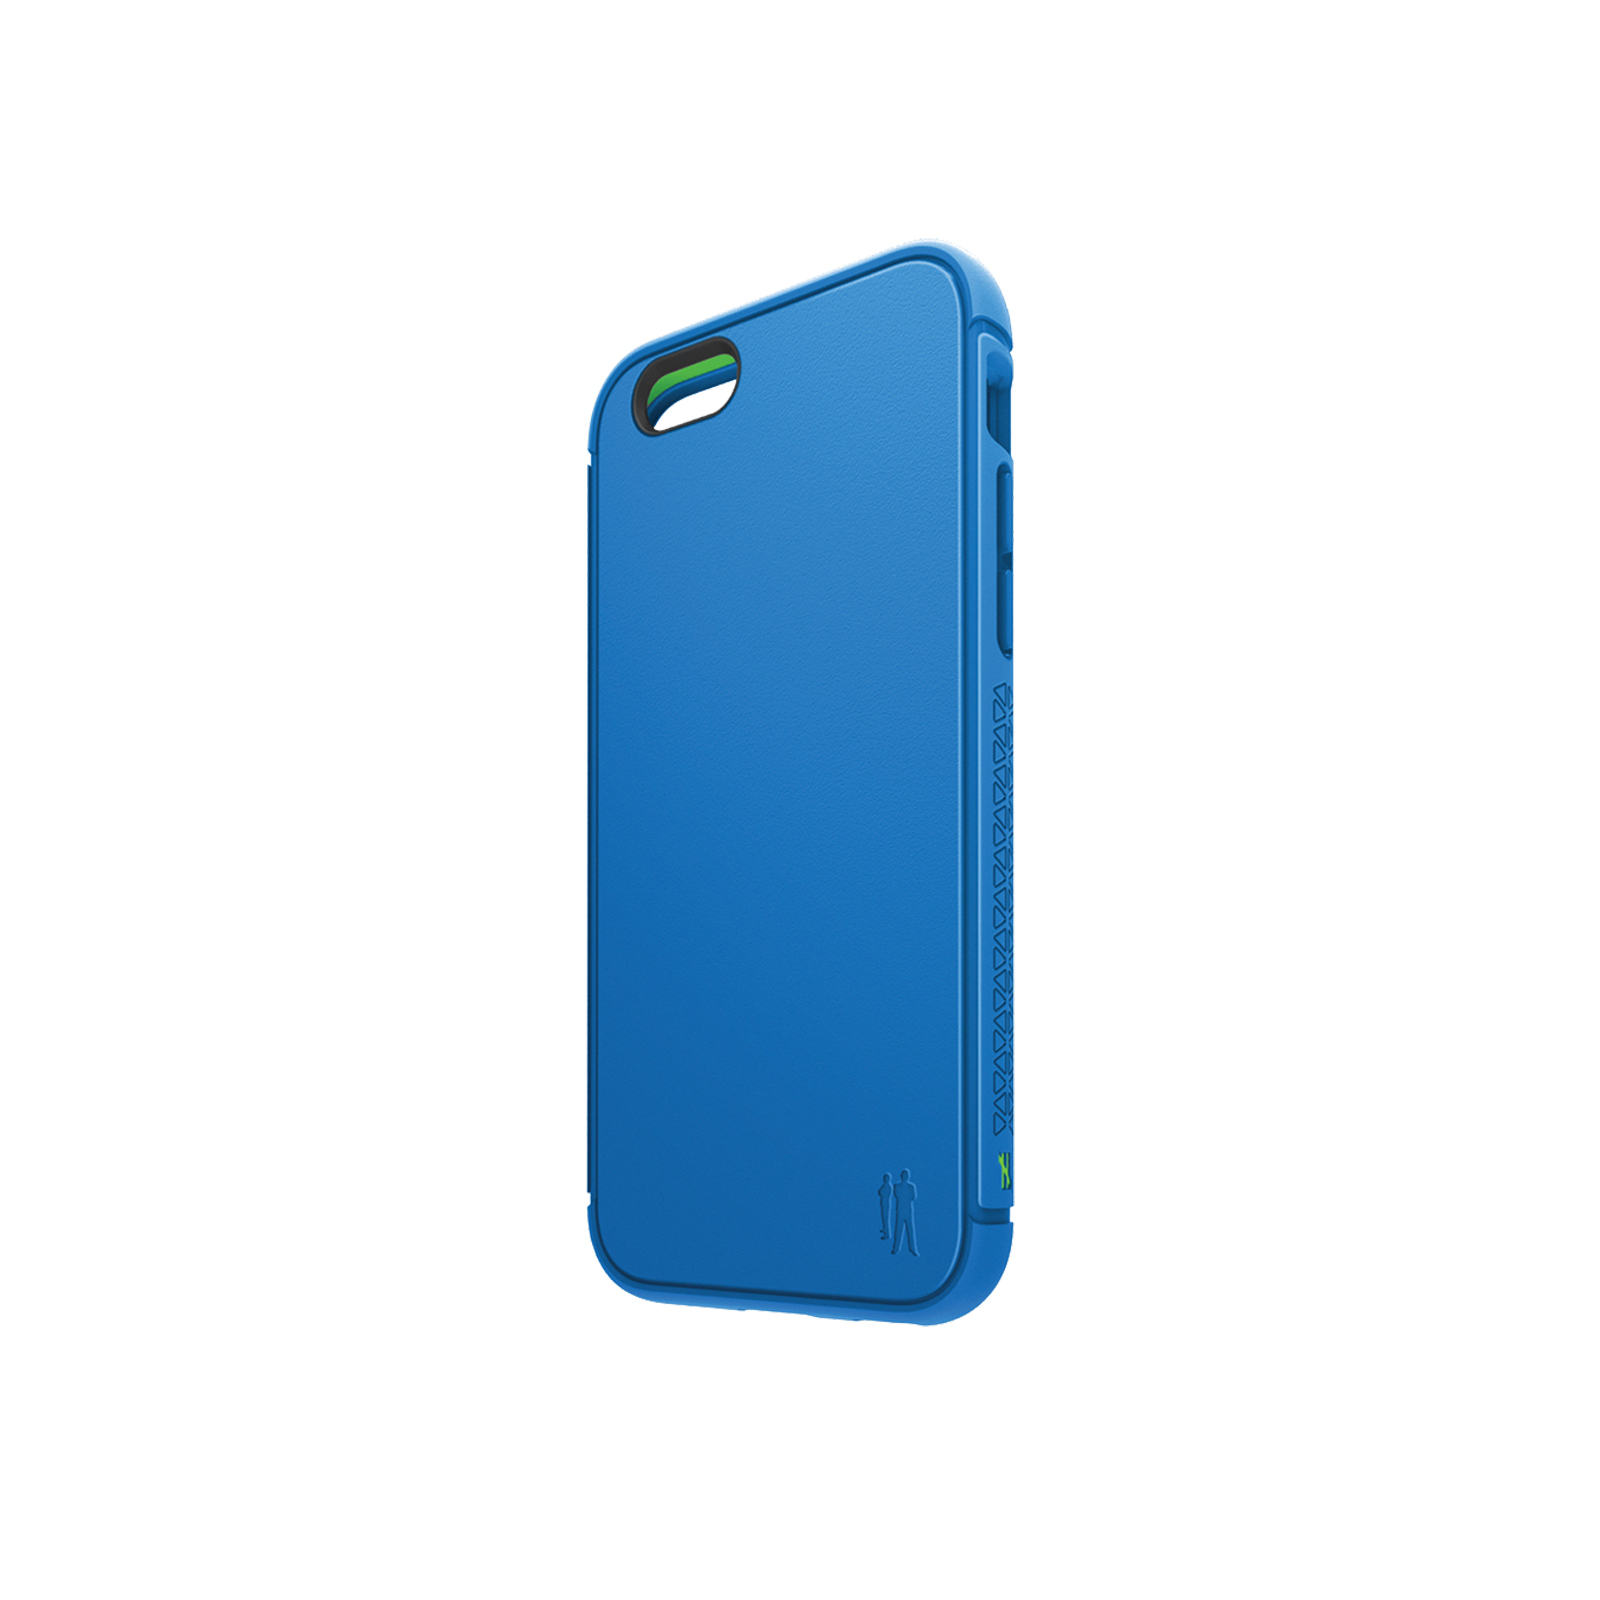 Contact iPhone 7 Plus / 8 Plus Blue Case Brand New